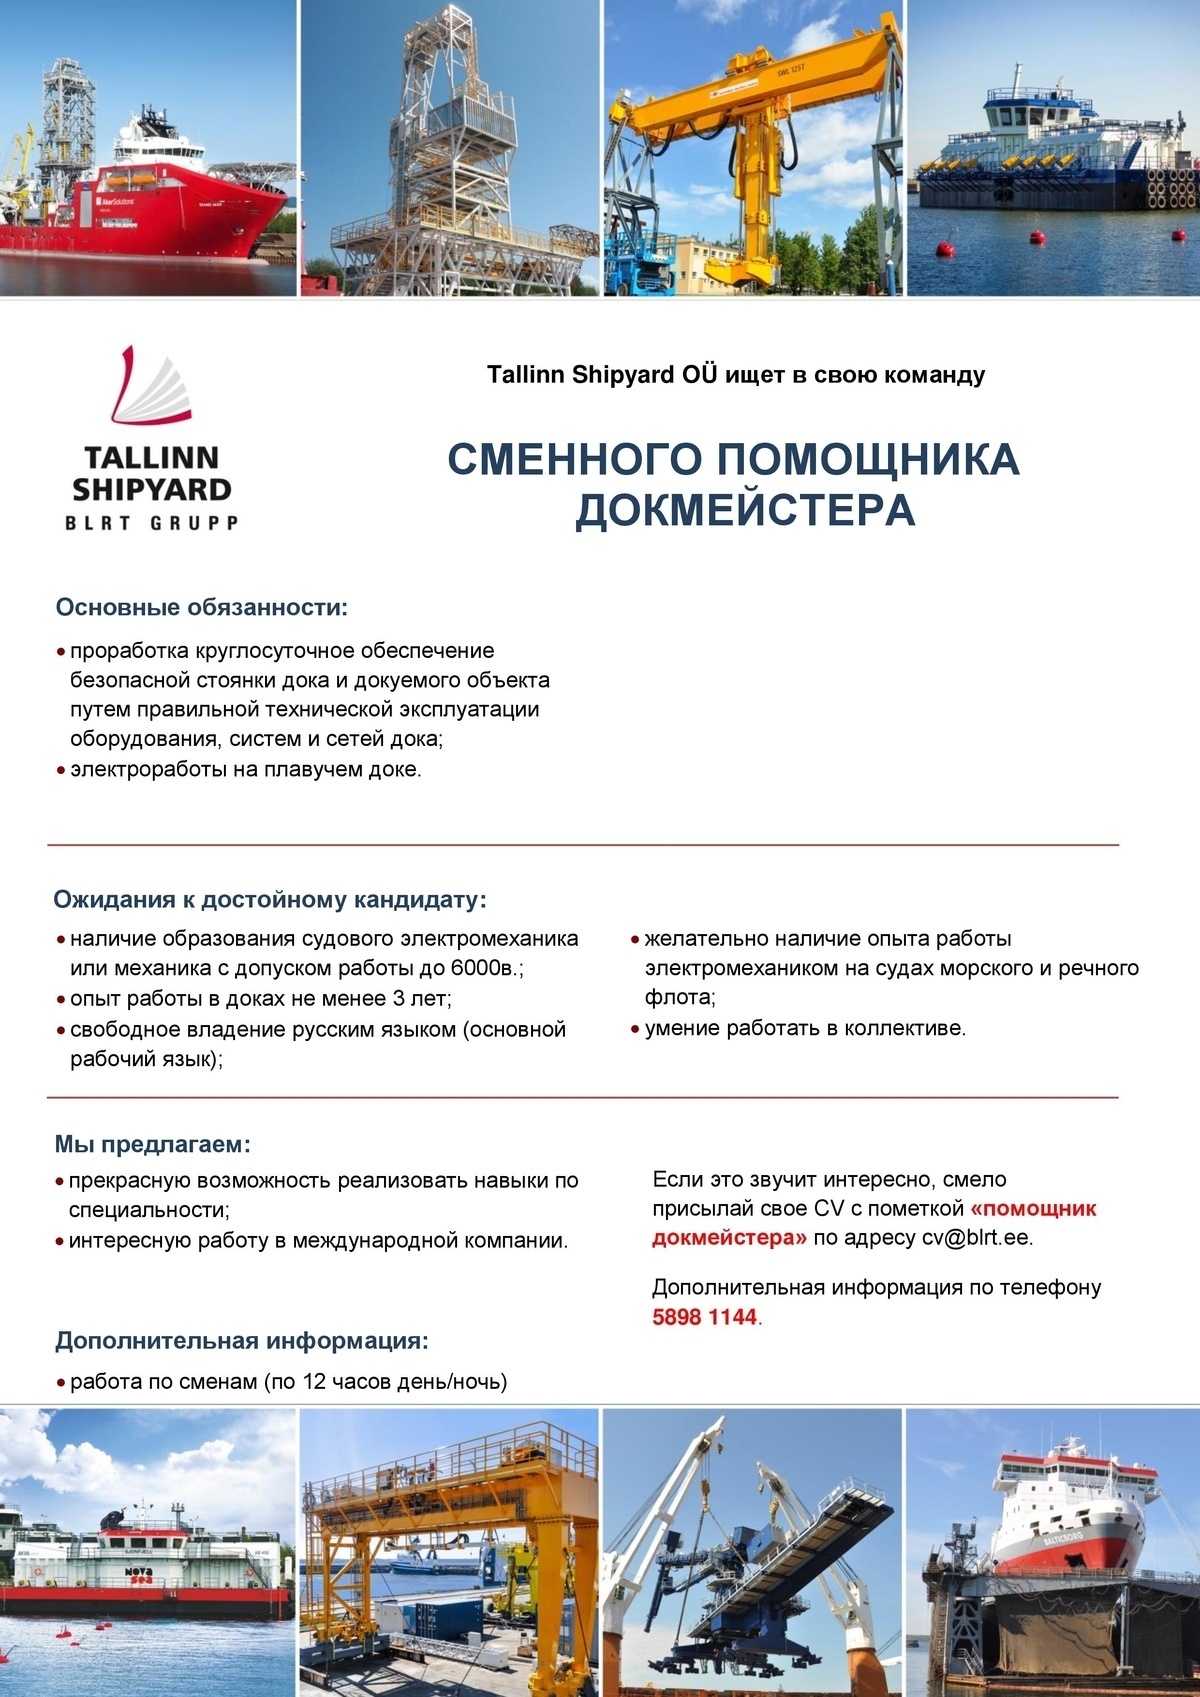 Tallinn Shipyard OÜ  СМЕННЫЙ ПОМОЩНИК ДОКМЕЙСТЕРА